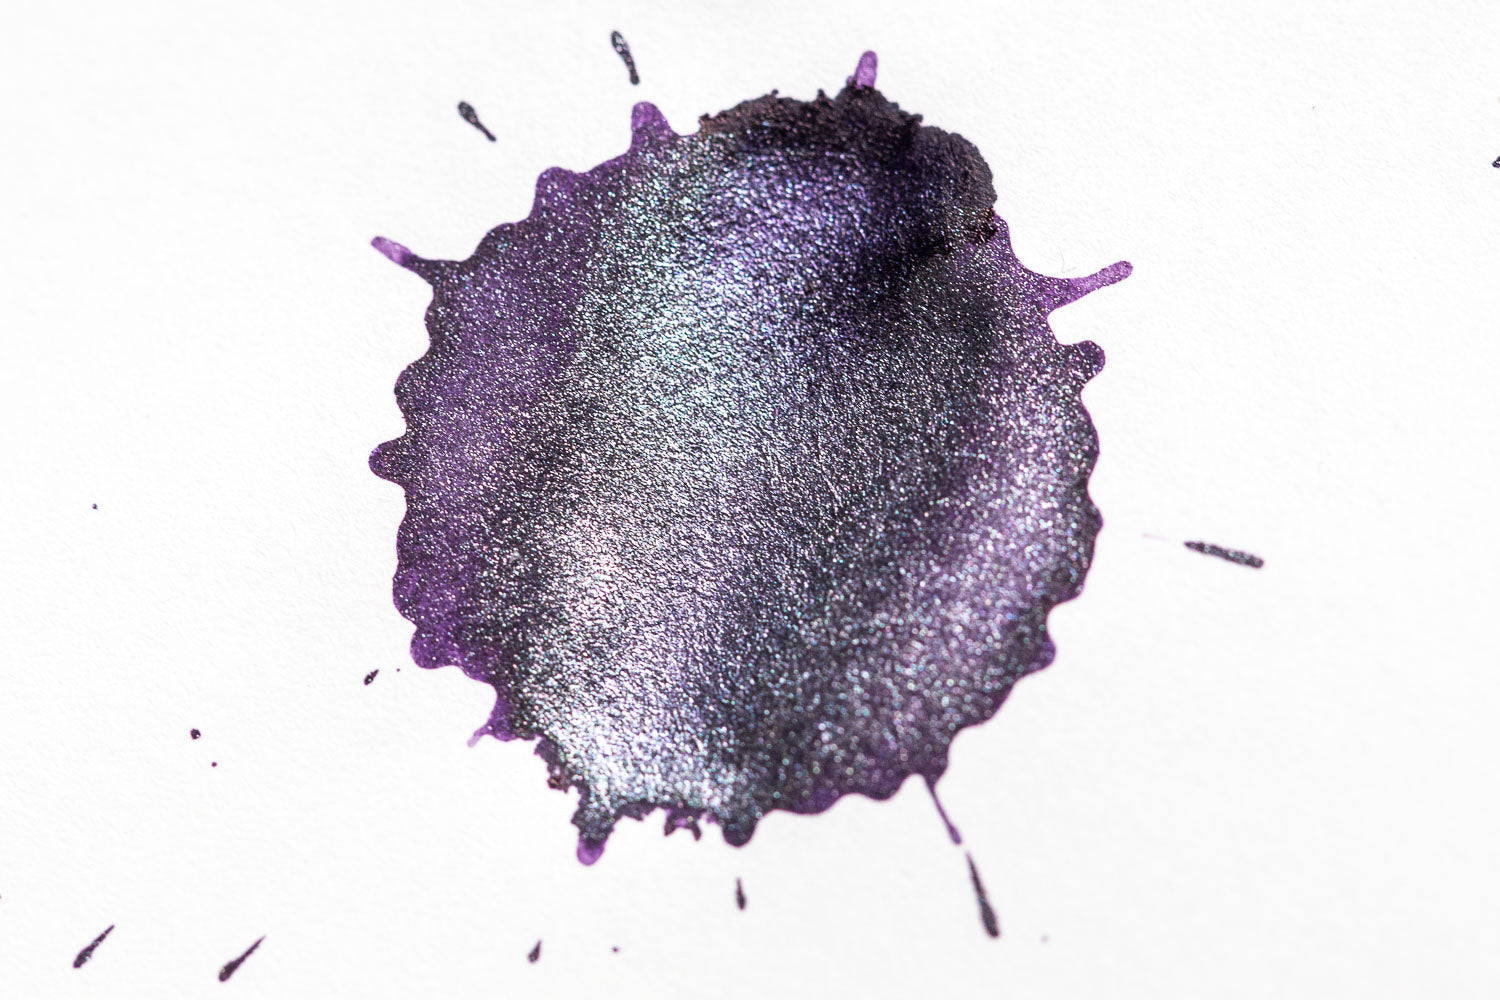 Jacques Herbin Amethyste de l'Oural fountain purple ink splatter on white paper